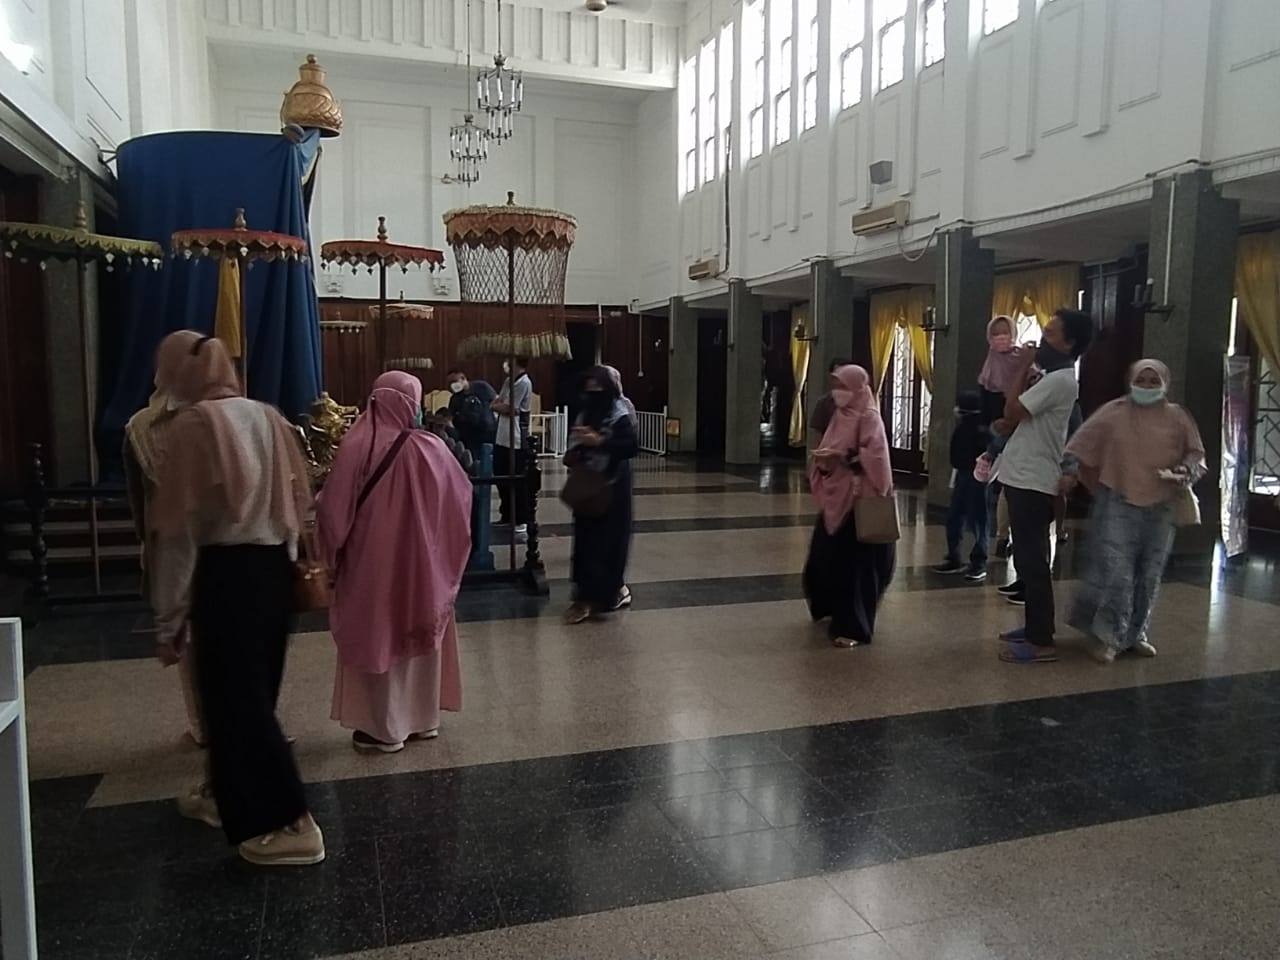 Ratusan Pengunjung Kunjungi Museum Mulawarman, Salah Satunya Mantan Wali Kota Surakarta